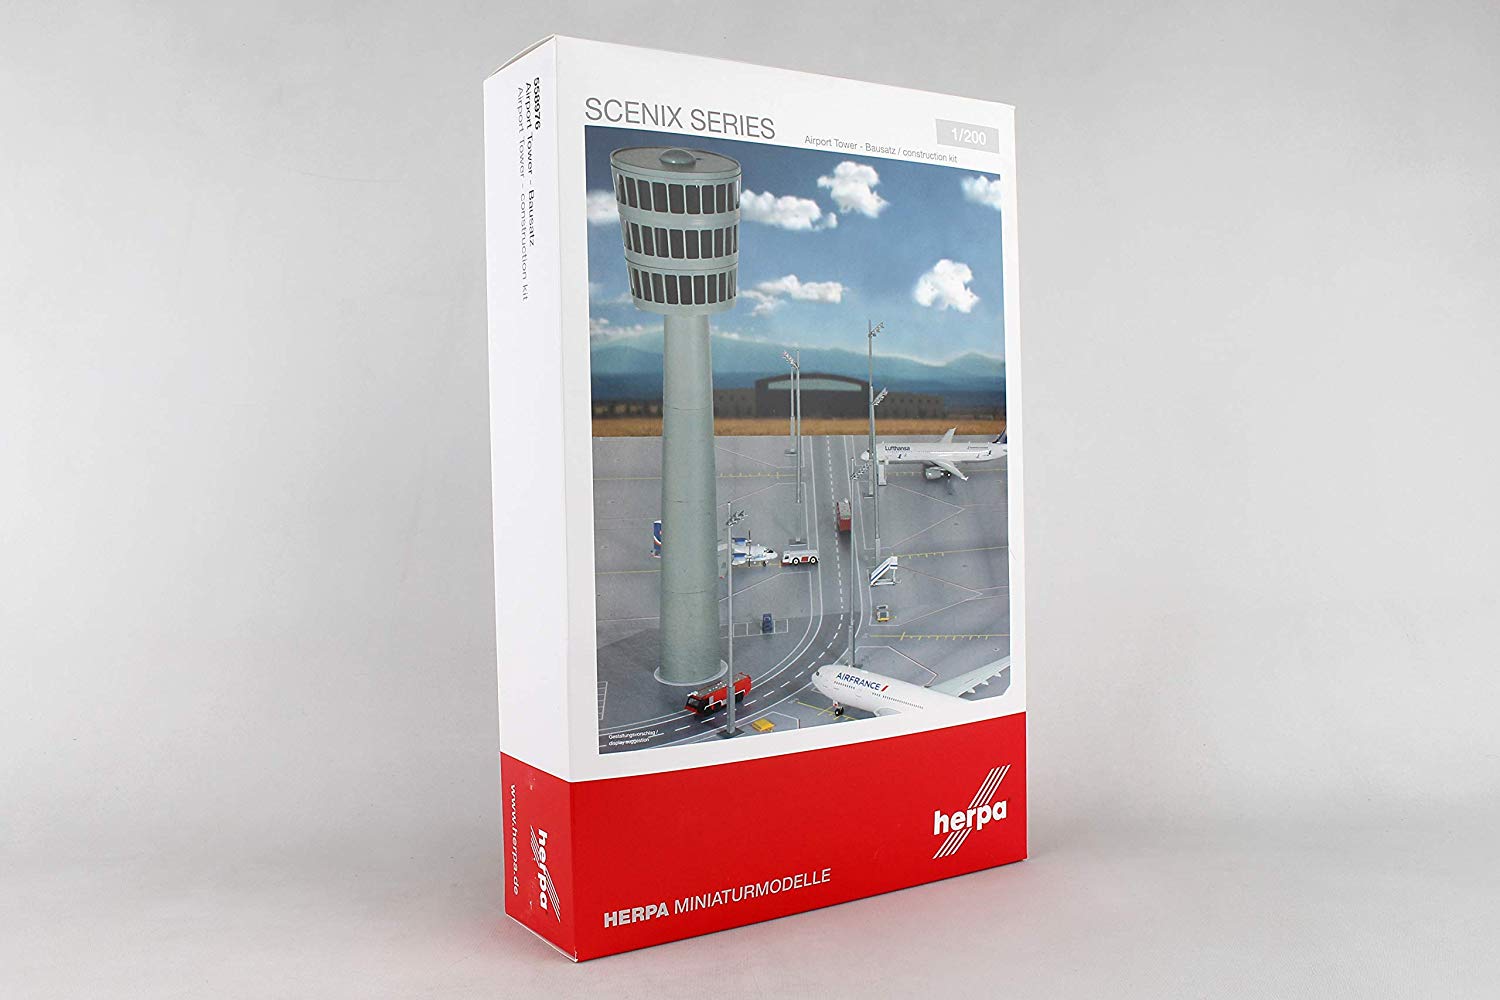 Herpa Scenix Airport Tower Model Kit